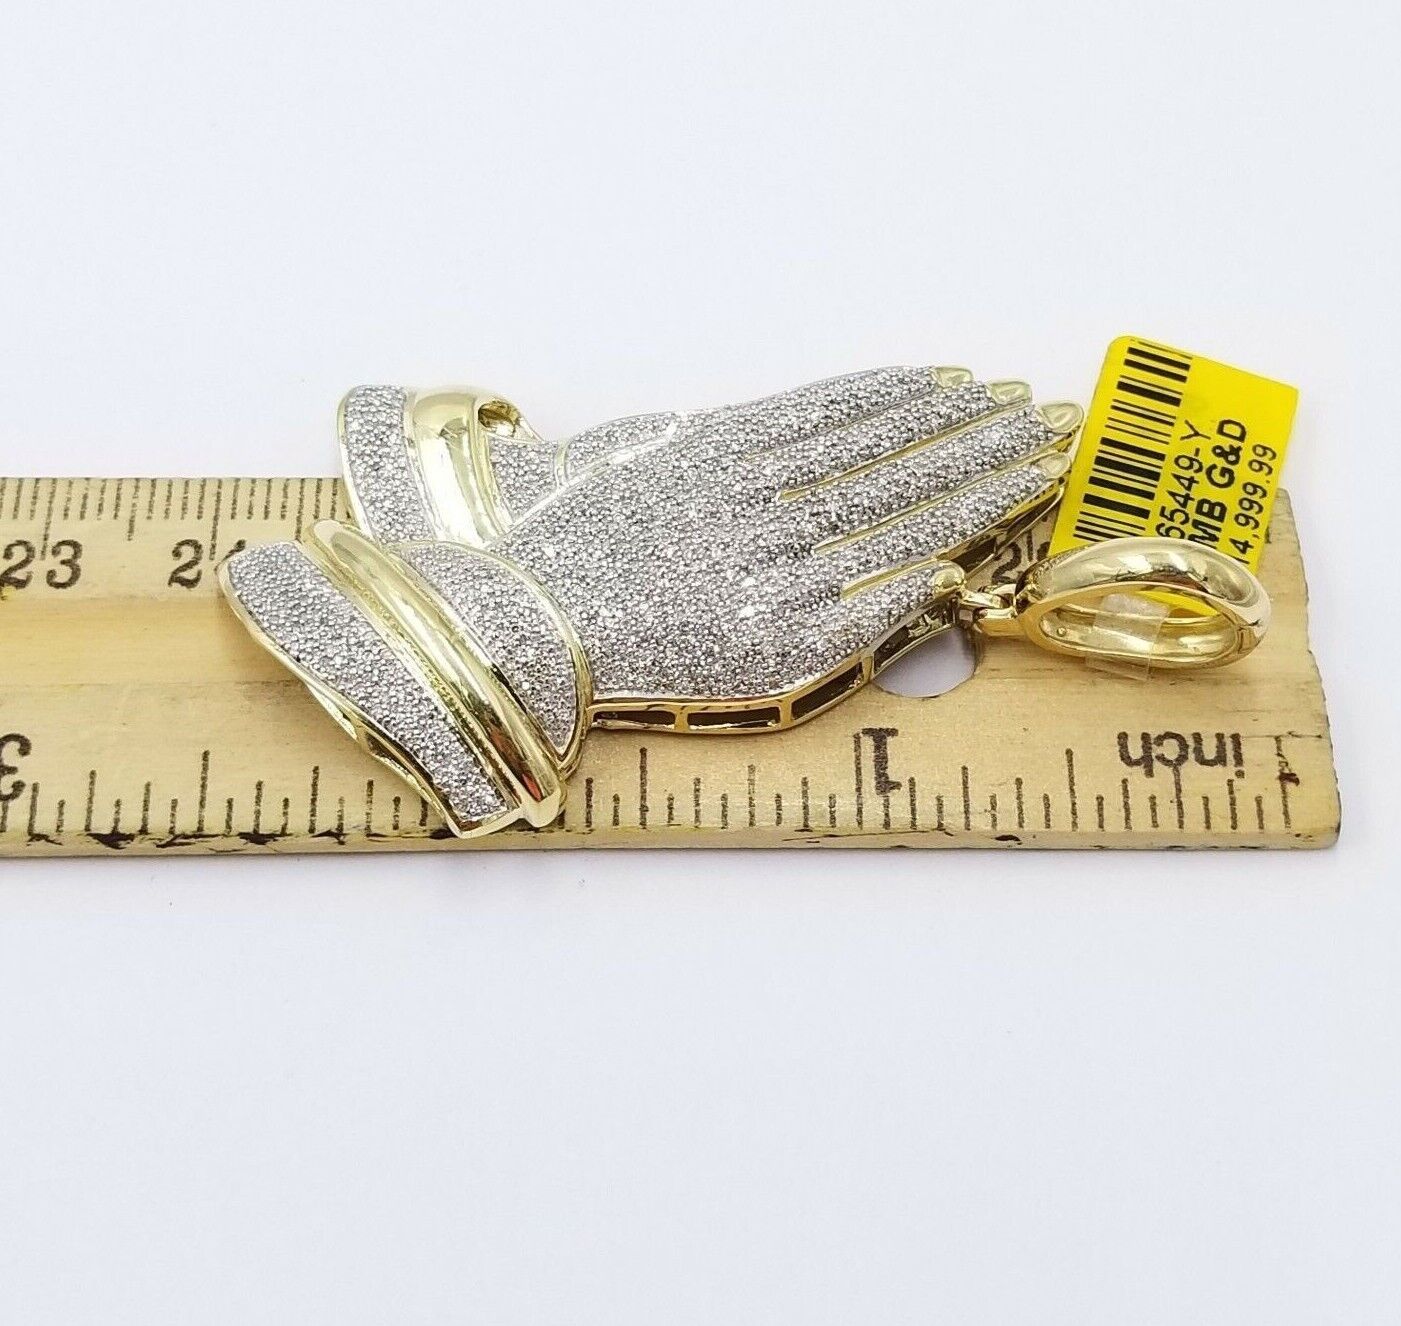 Real 10k Yellow Gold Money Bag Diamond Charm Pendant 10kt for